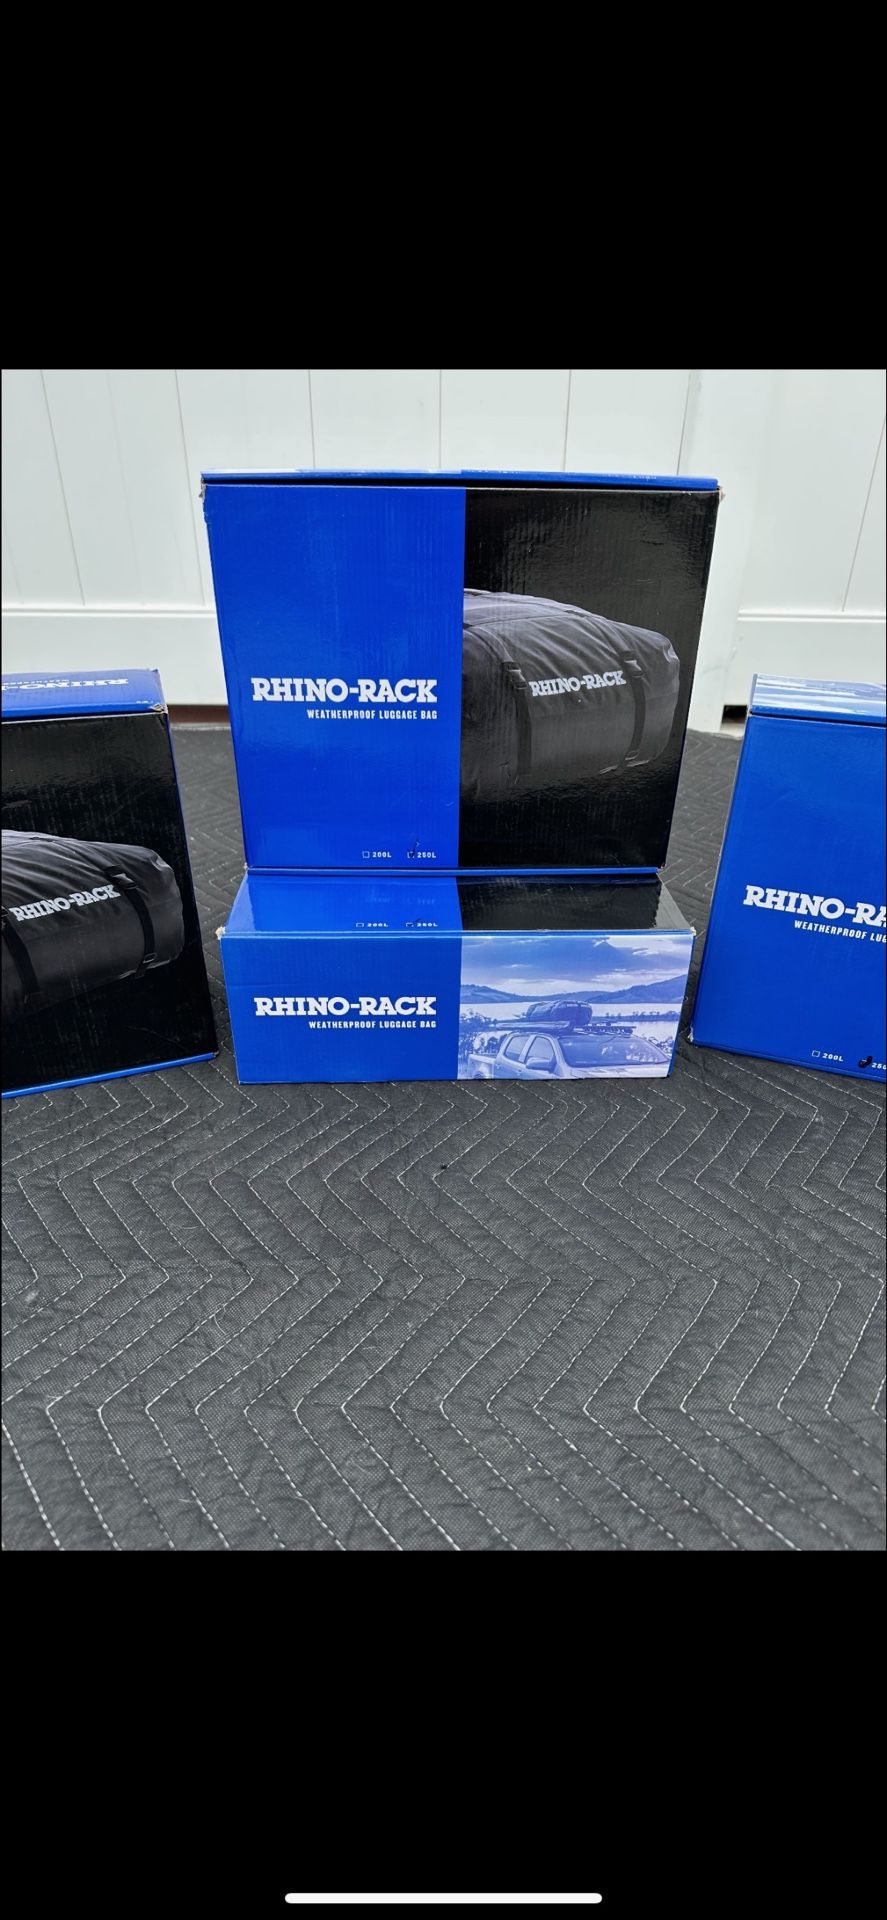 Rhino Rack Weatherproof Luggage Bag/ Travel/ Storage/ Vacation/ Vehicle/ Rhino Rack Bag/ Brand New 